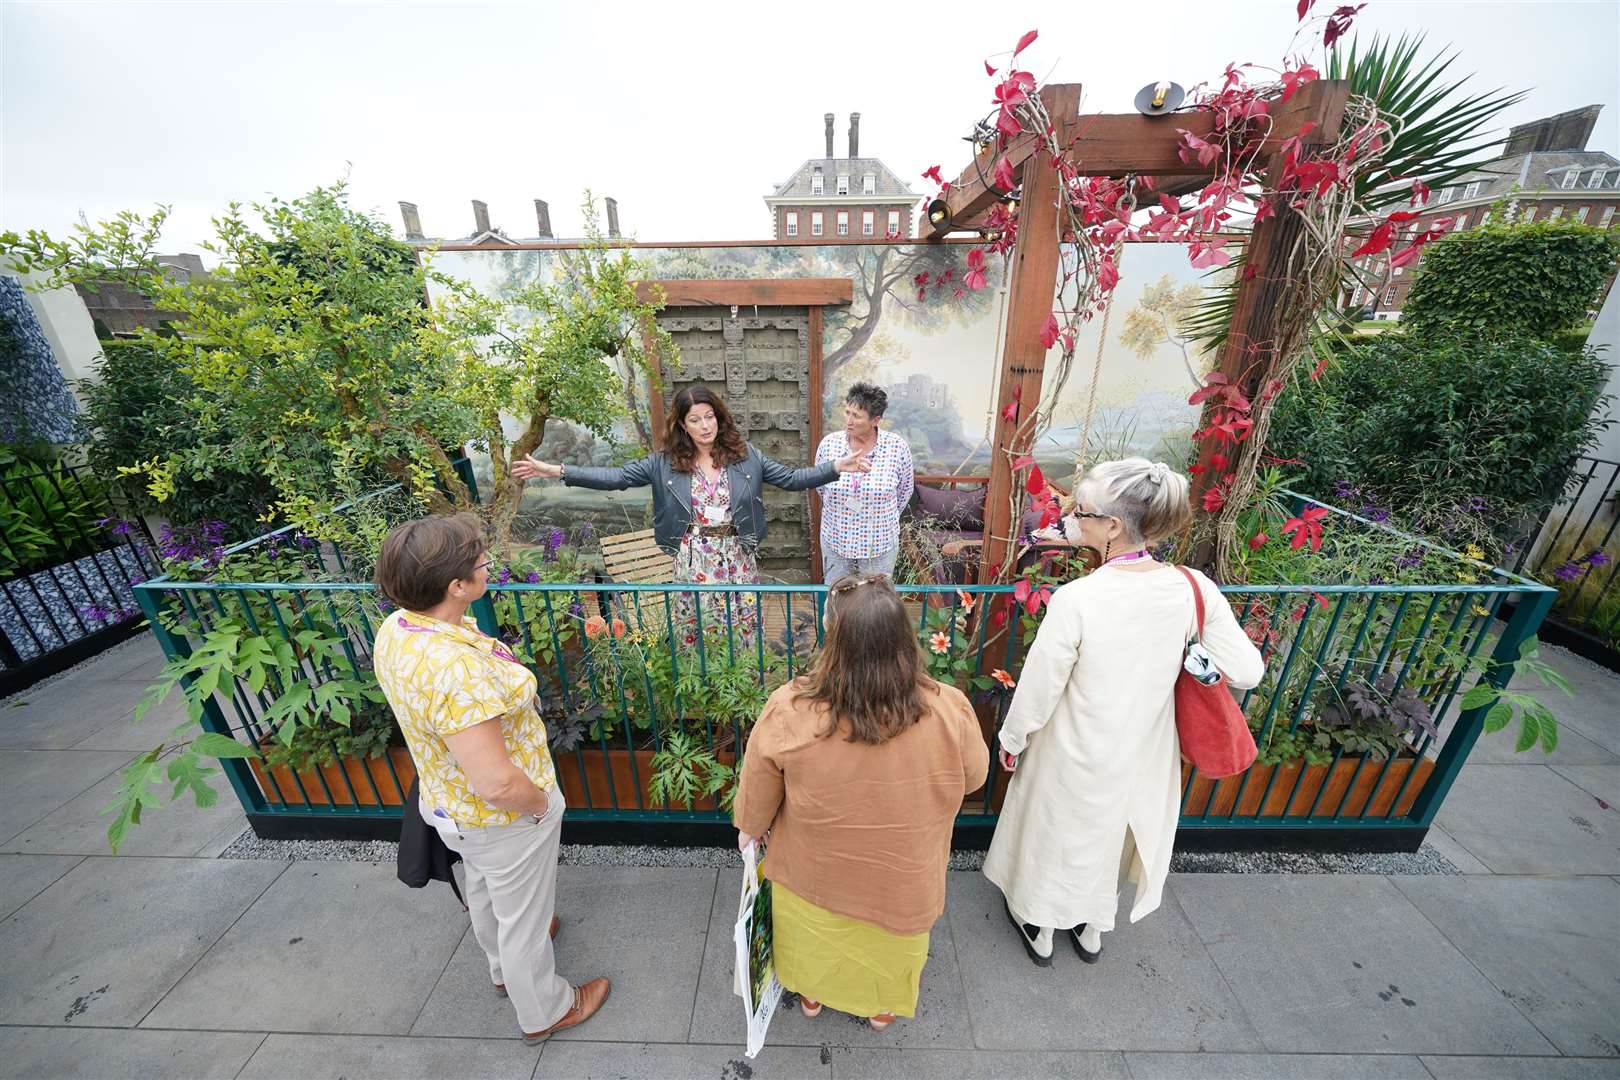 Designer Martha Krempel discusses her Arcadia balcony garden with visitors (Yui Mok/PA)